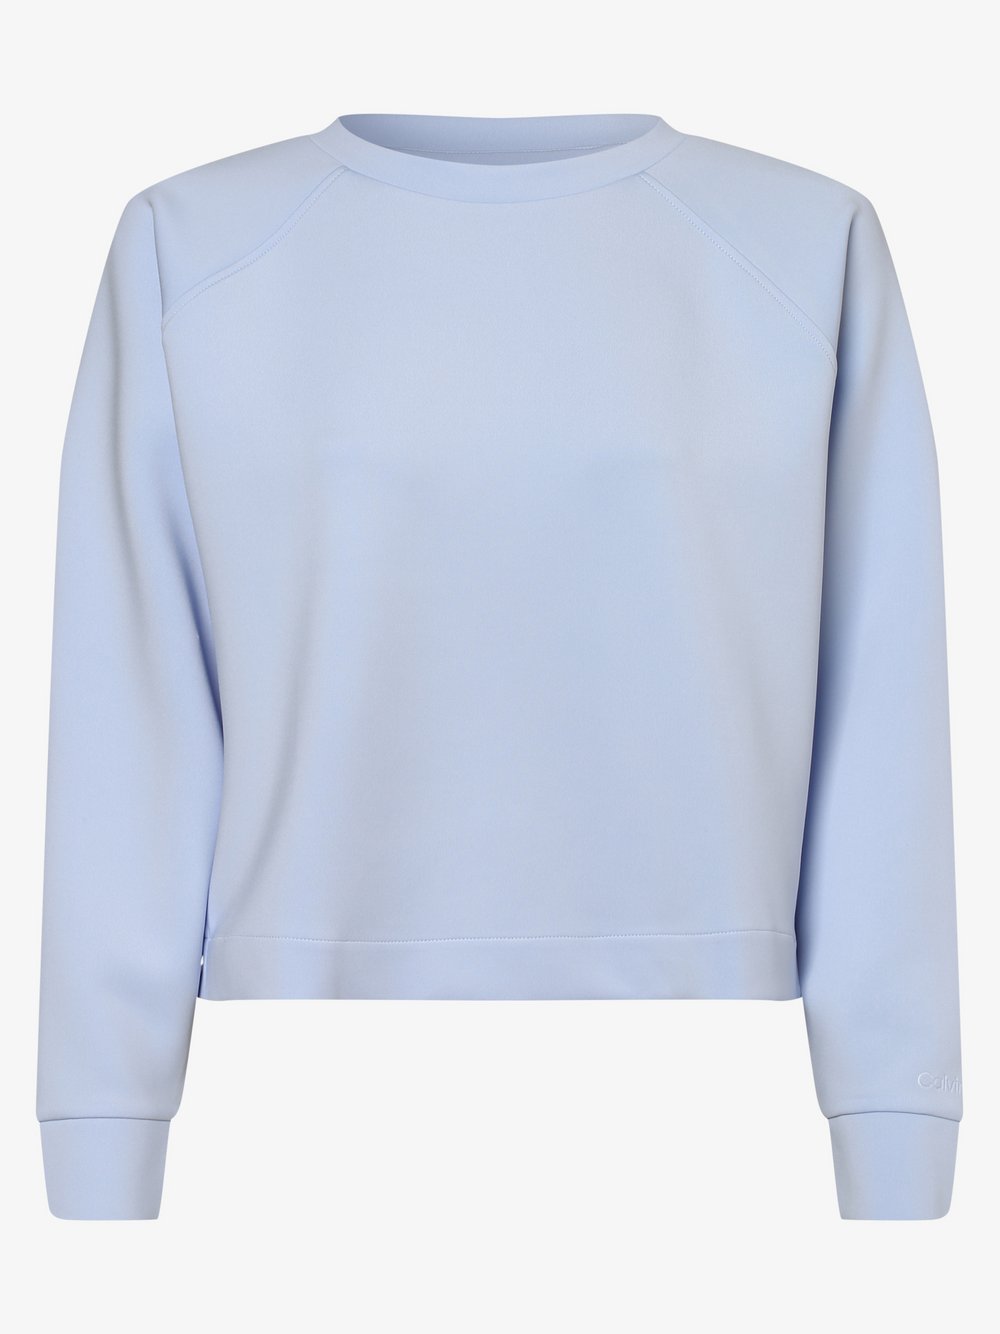 Calvin Klein - Damska bluza nierozpinana, niebieski